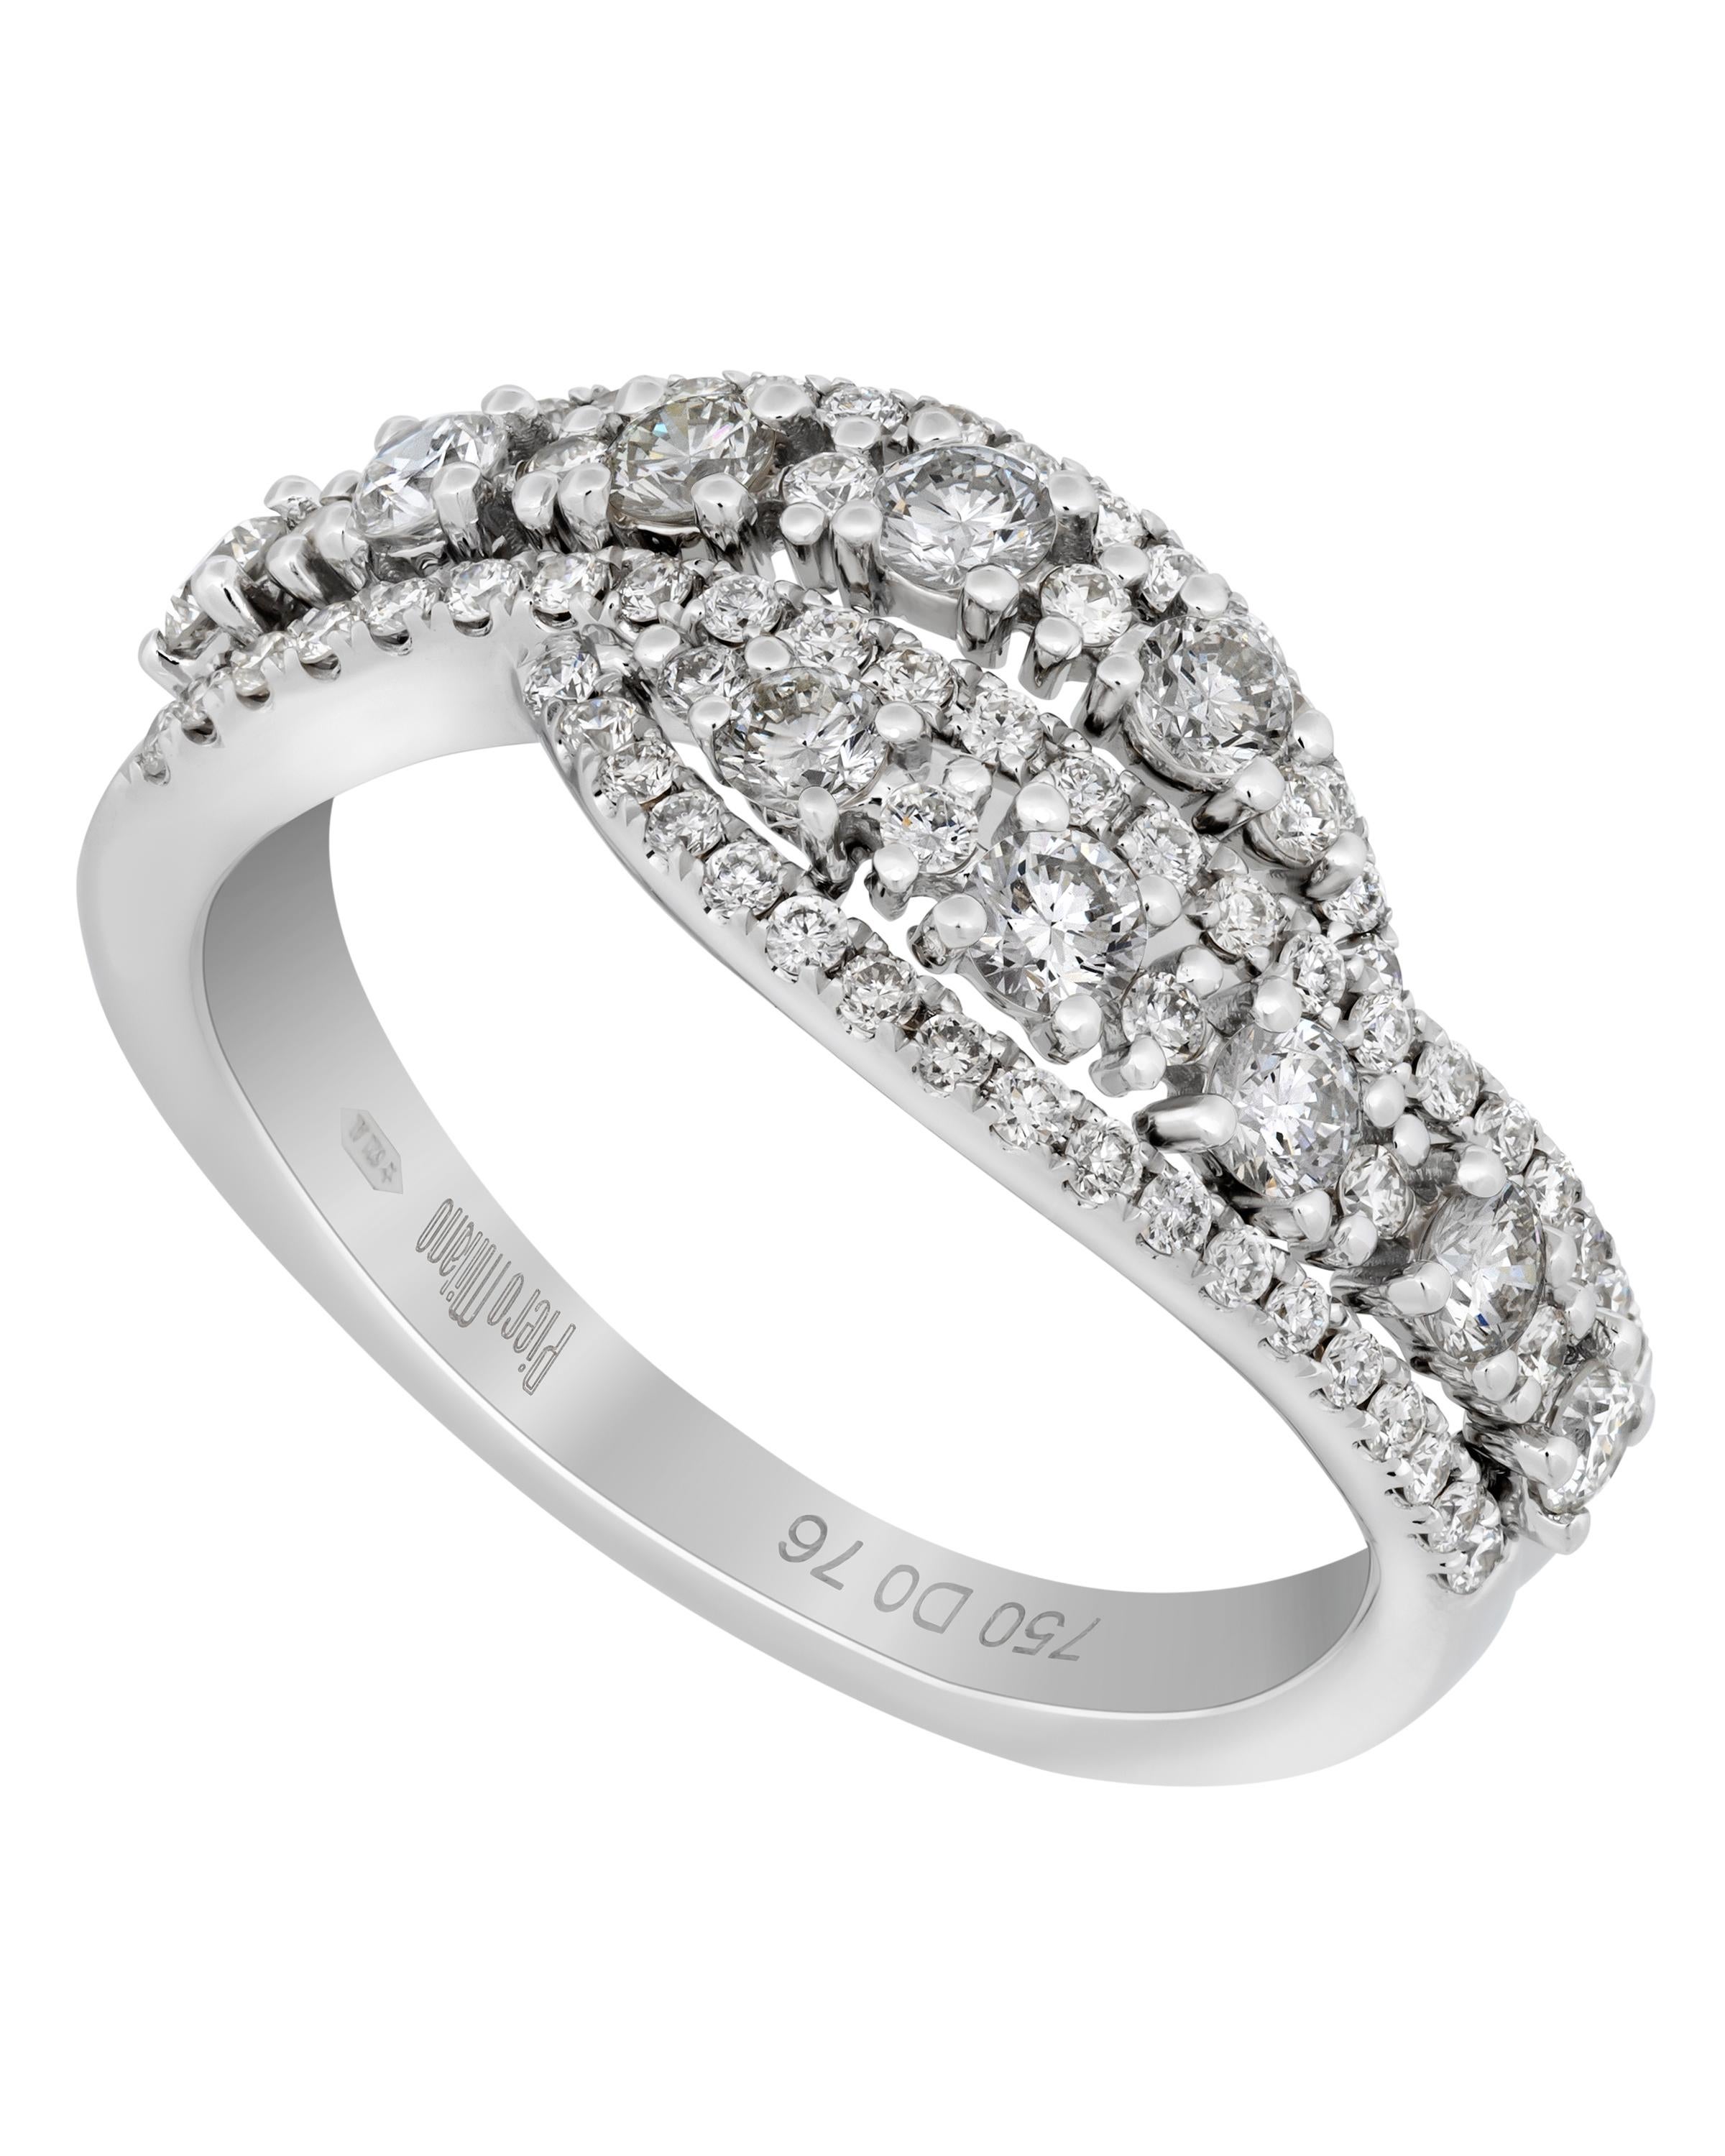 Contemporary Piero Milano 18K White Gold Diamond Ring Sz 6.25 For Sale